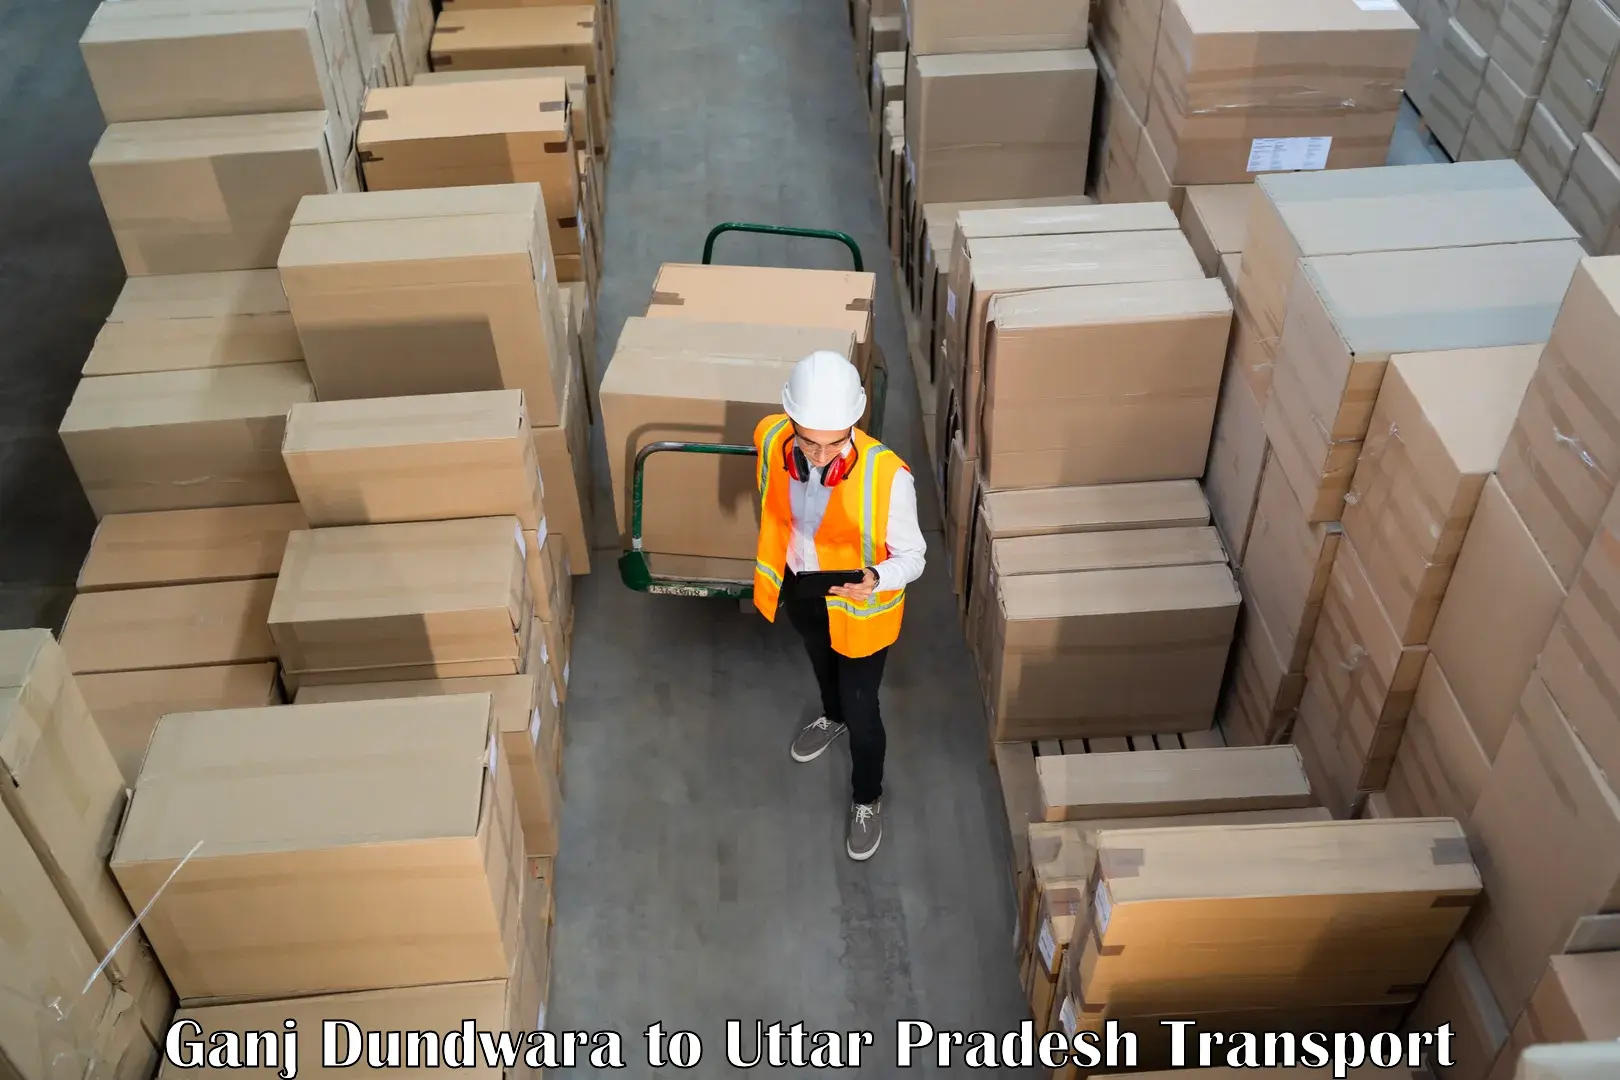 Truck transport companies in India Ganj Dundwara to Kirauli